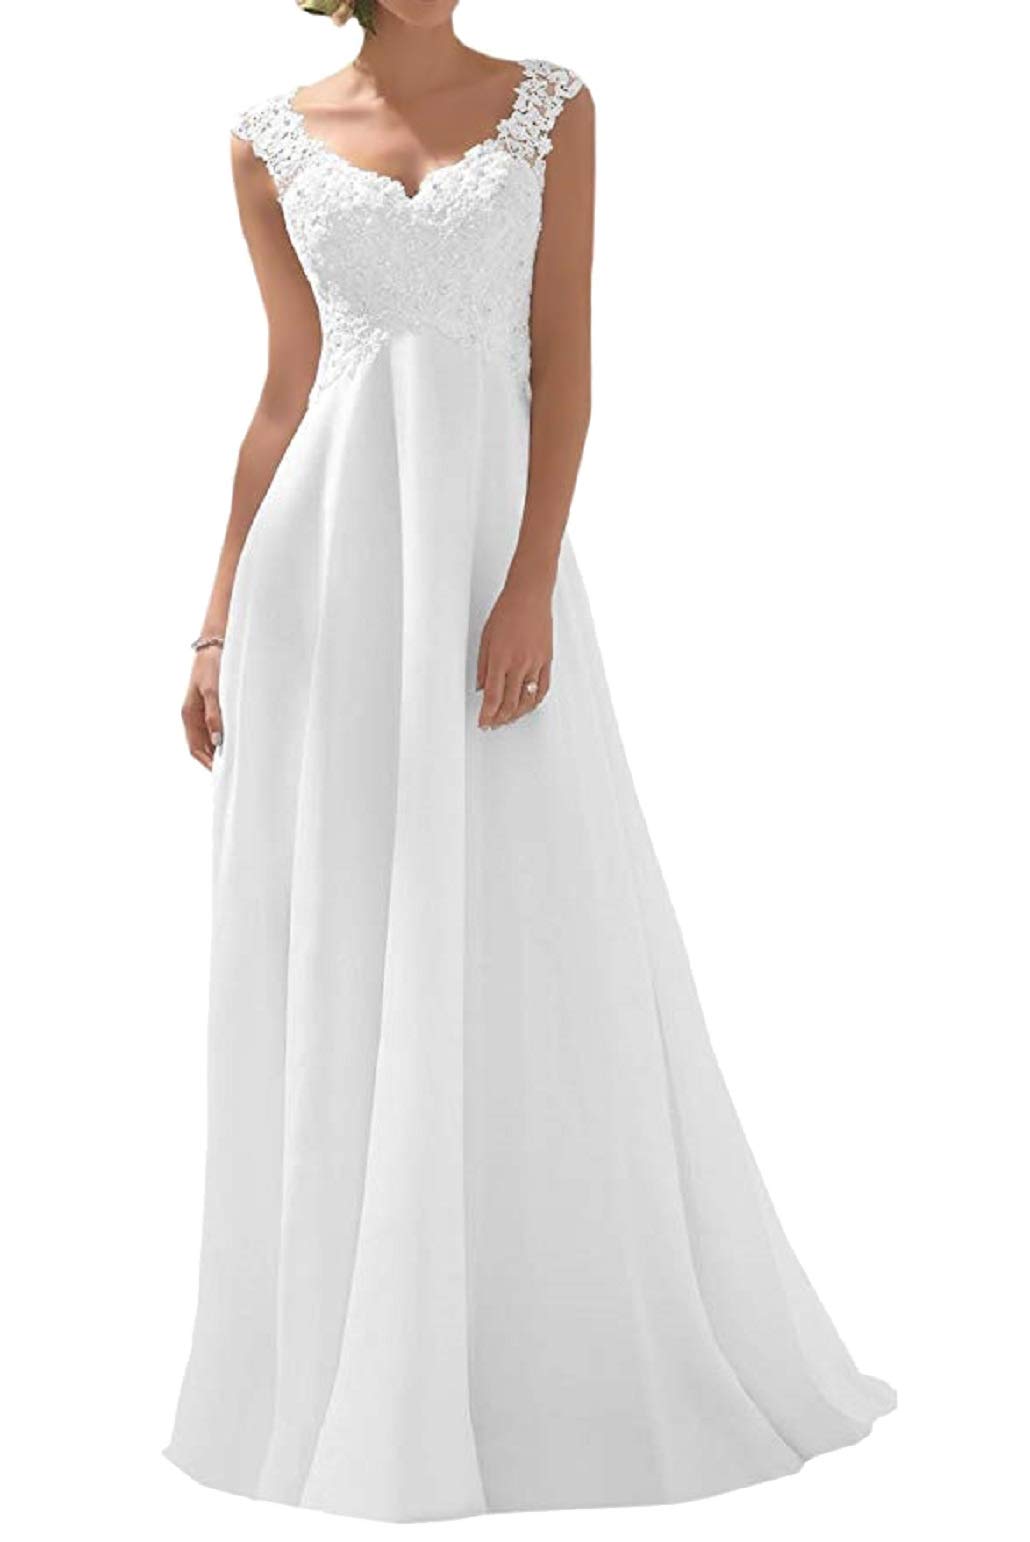 Romantic-Fashion Brautkleid Hochzeitskleid Weiß Modell W191 A-Linie Stickerei Chiffon DE Größe 44